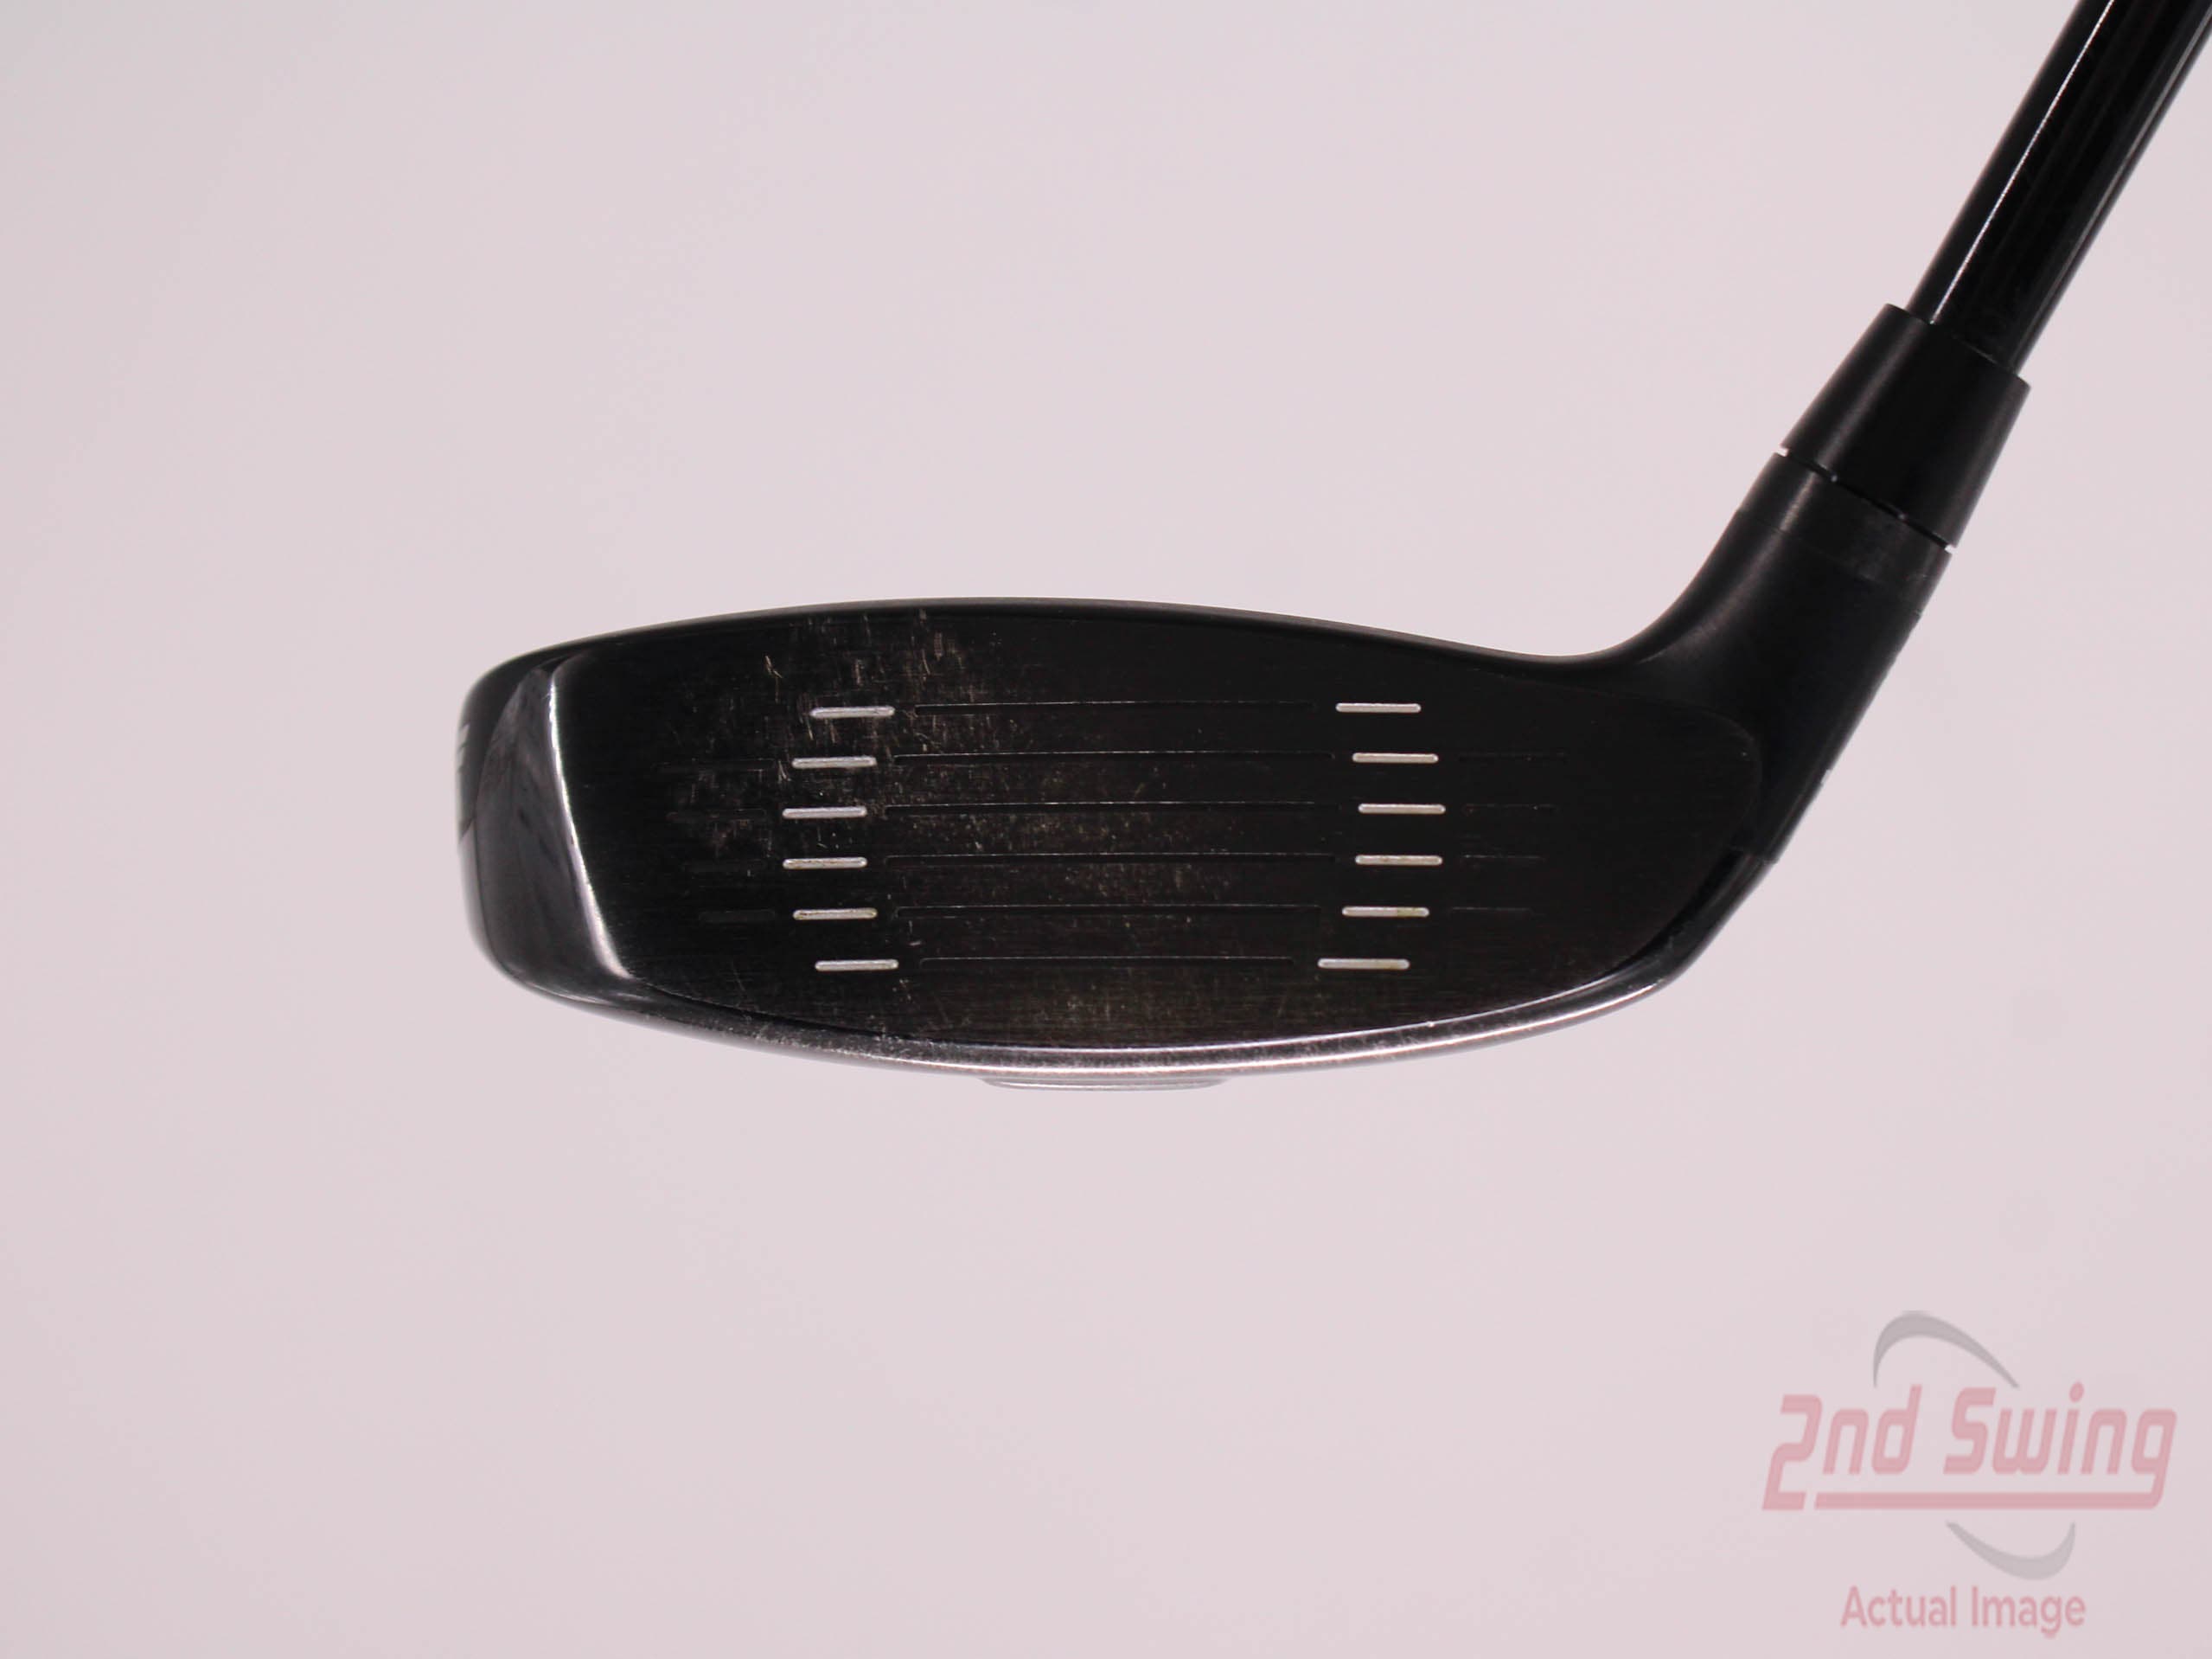 PXG 0317 X Proto Hybrid (D-N2227592132) | 2nd Swing Golf